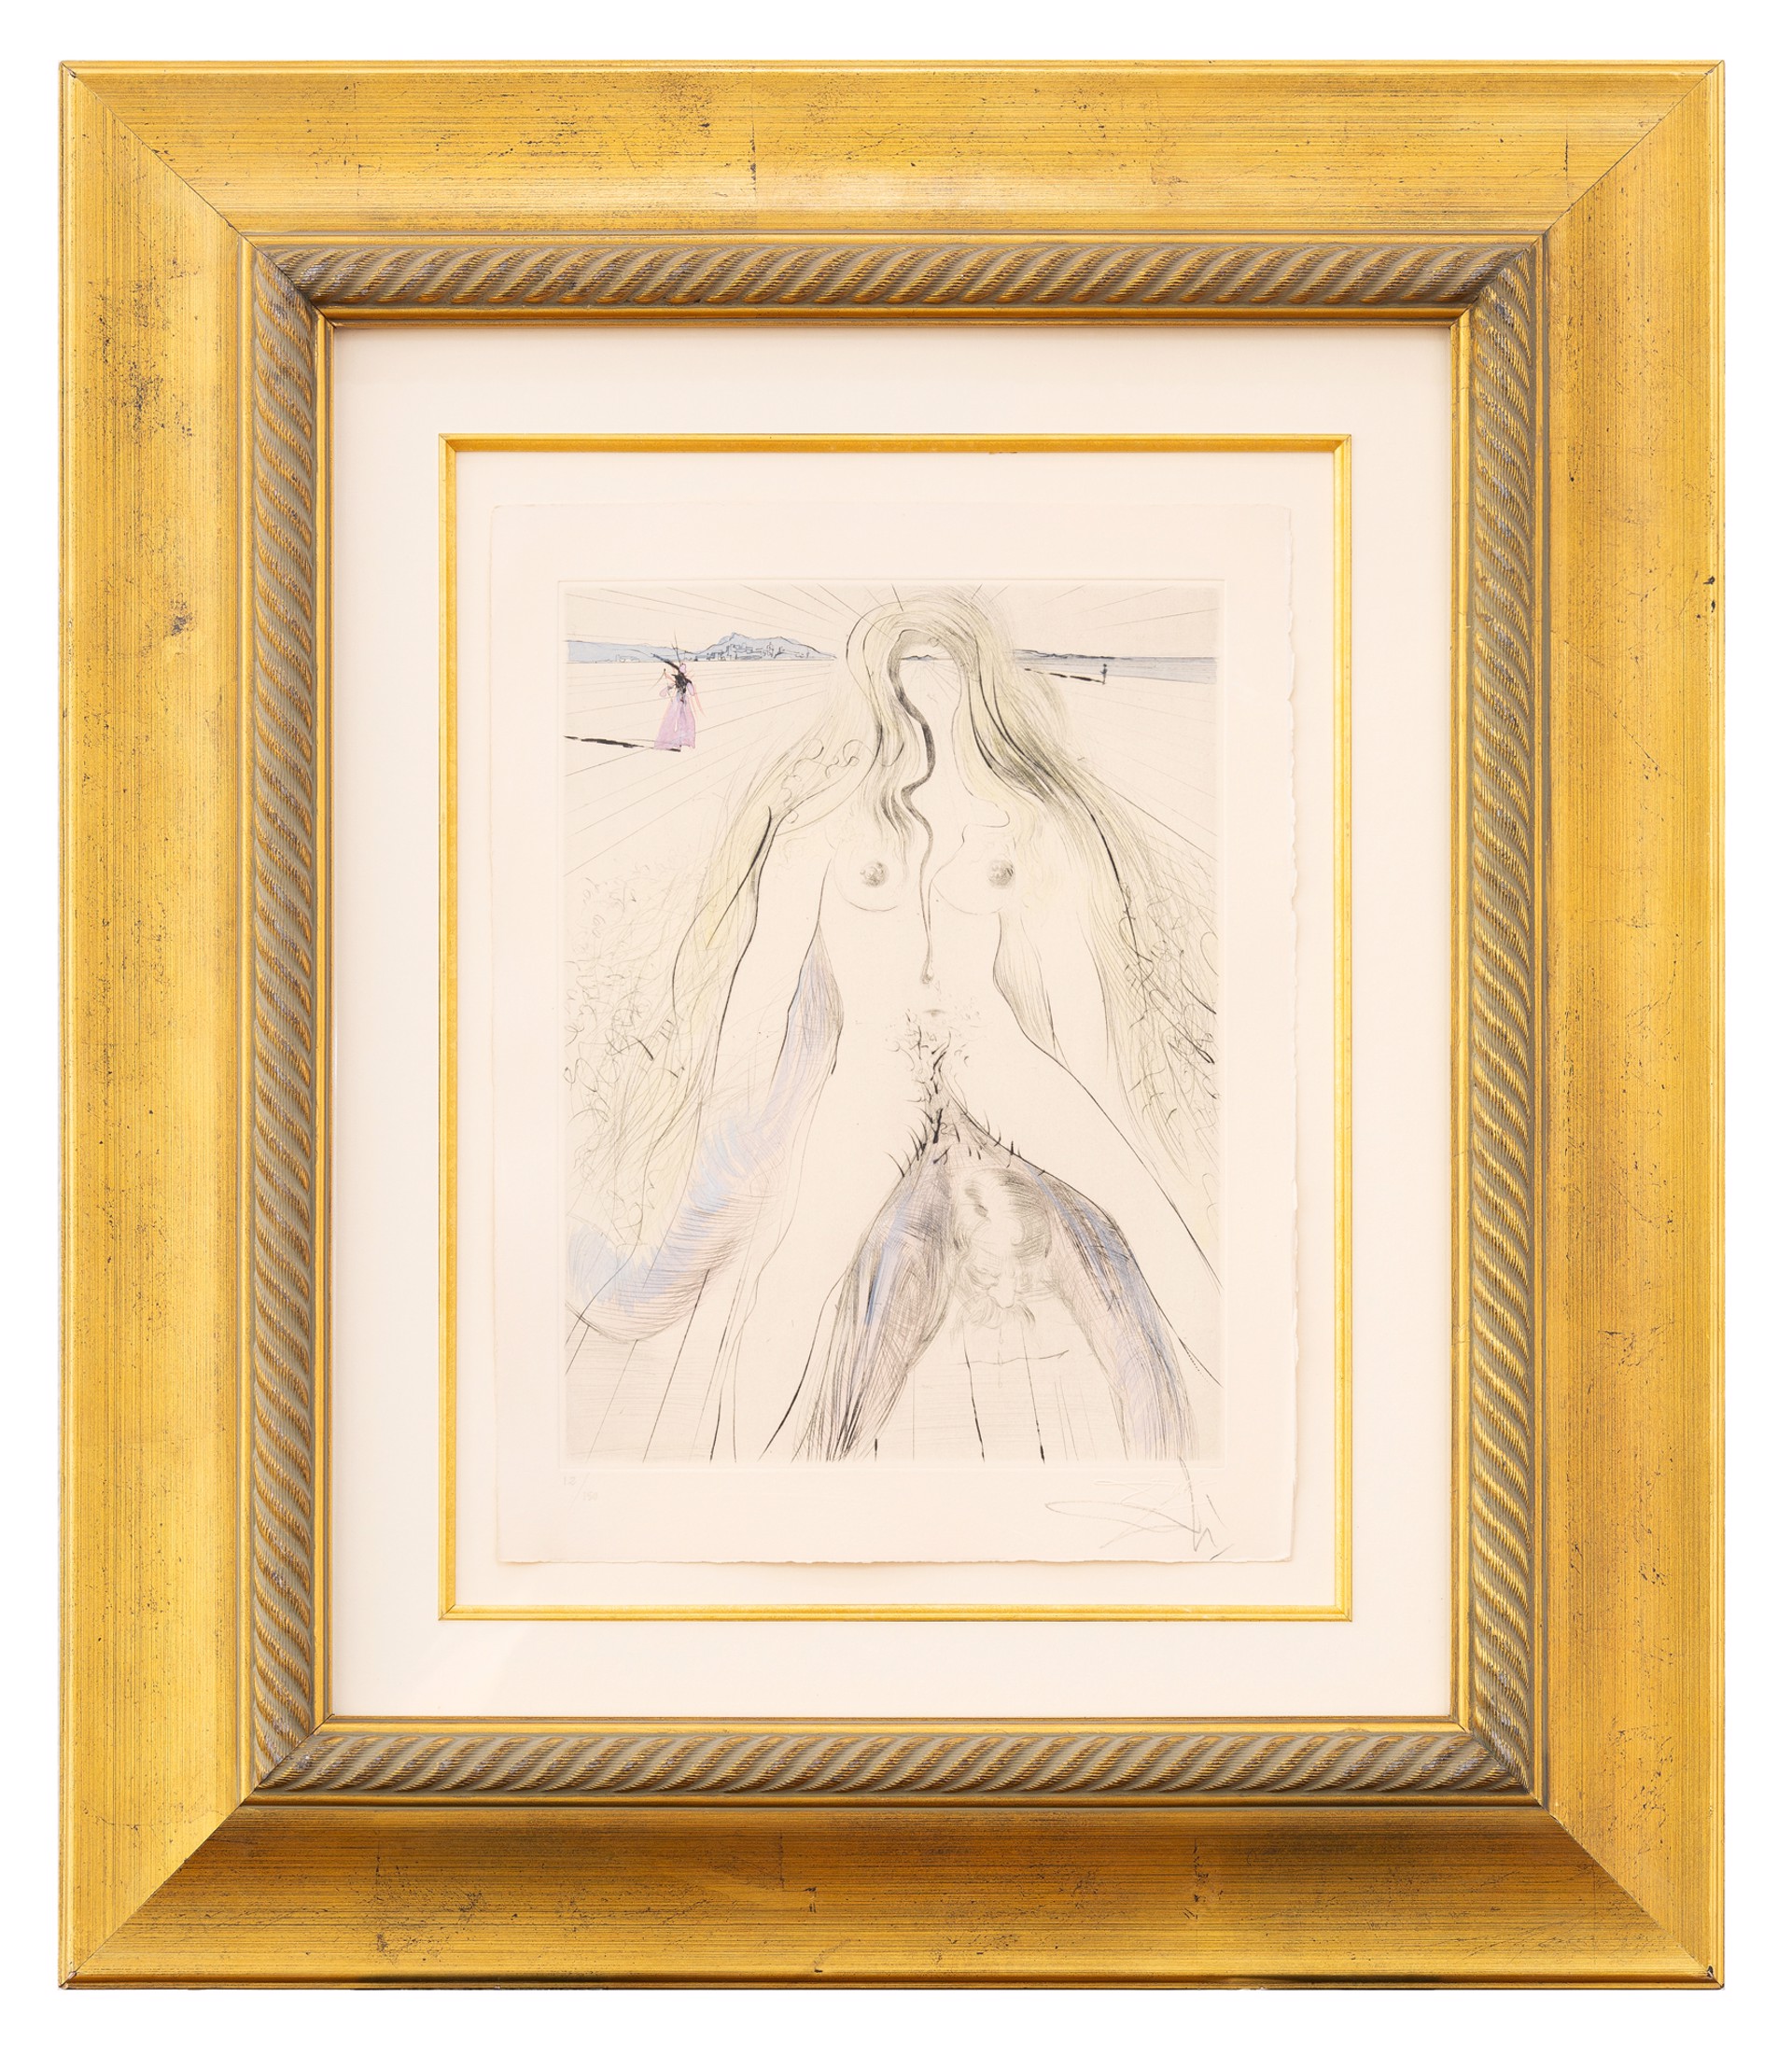 Venus in Furs  "Woman on Horseback" by Salvador Dalí